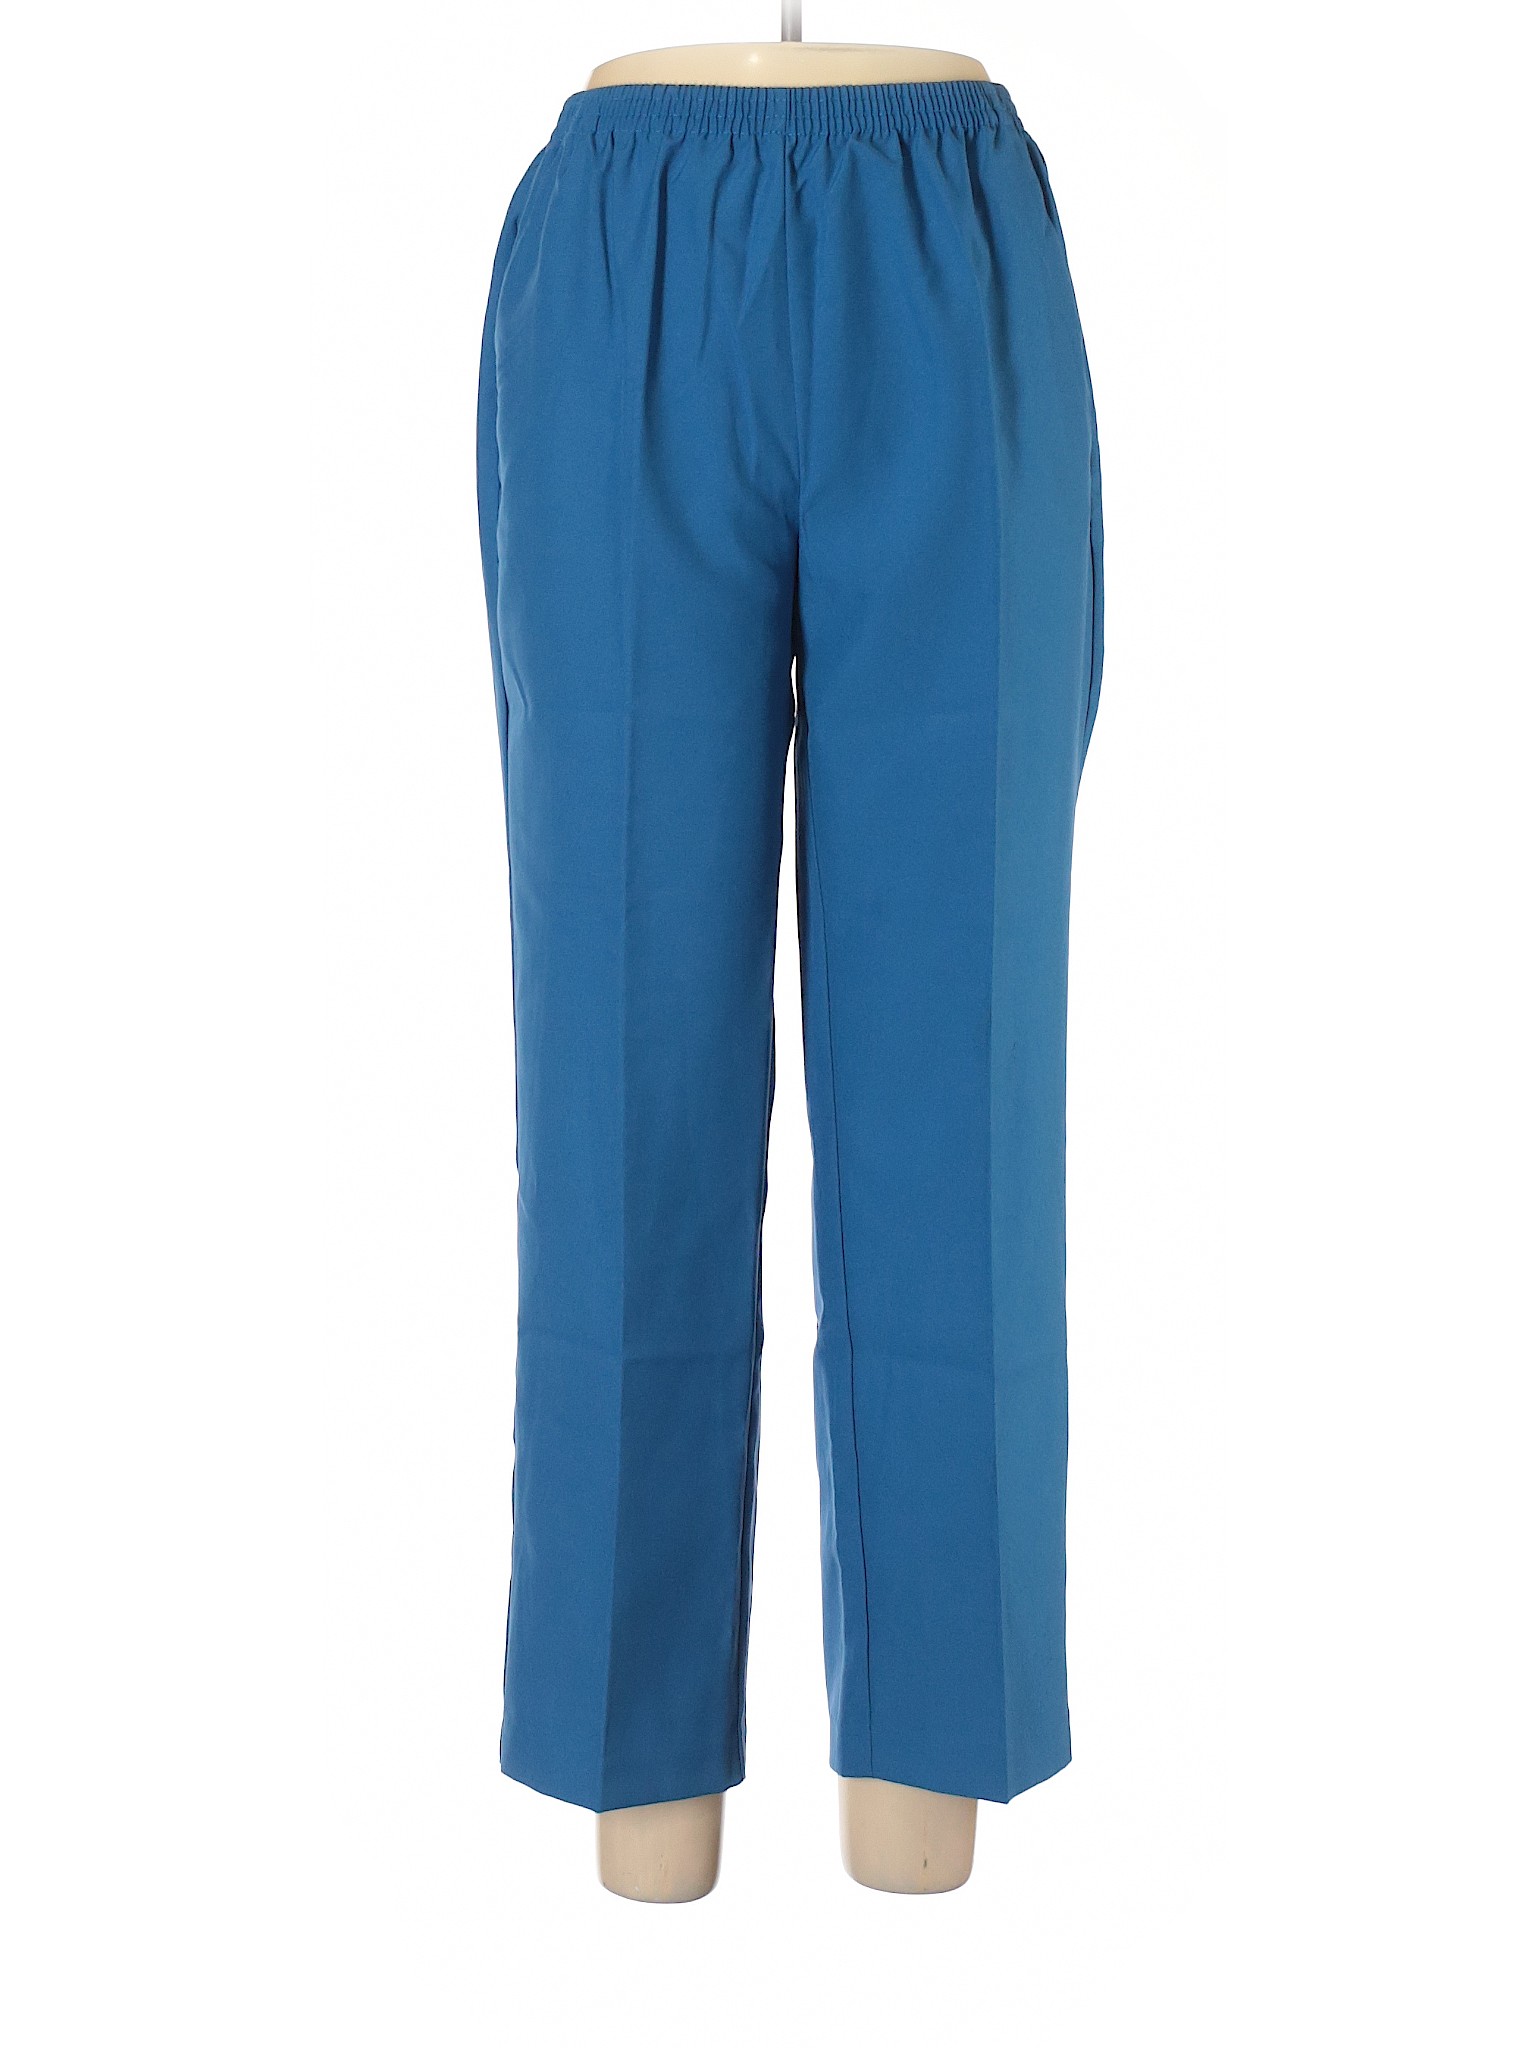 Sara Morgan for Haband Women Green Casual Pants 12 Petites | eBay